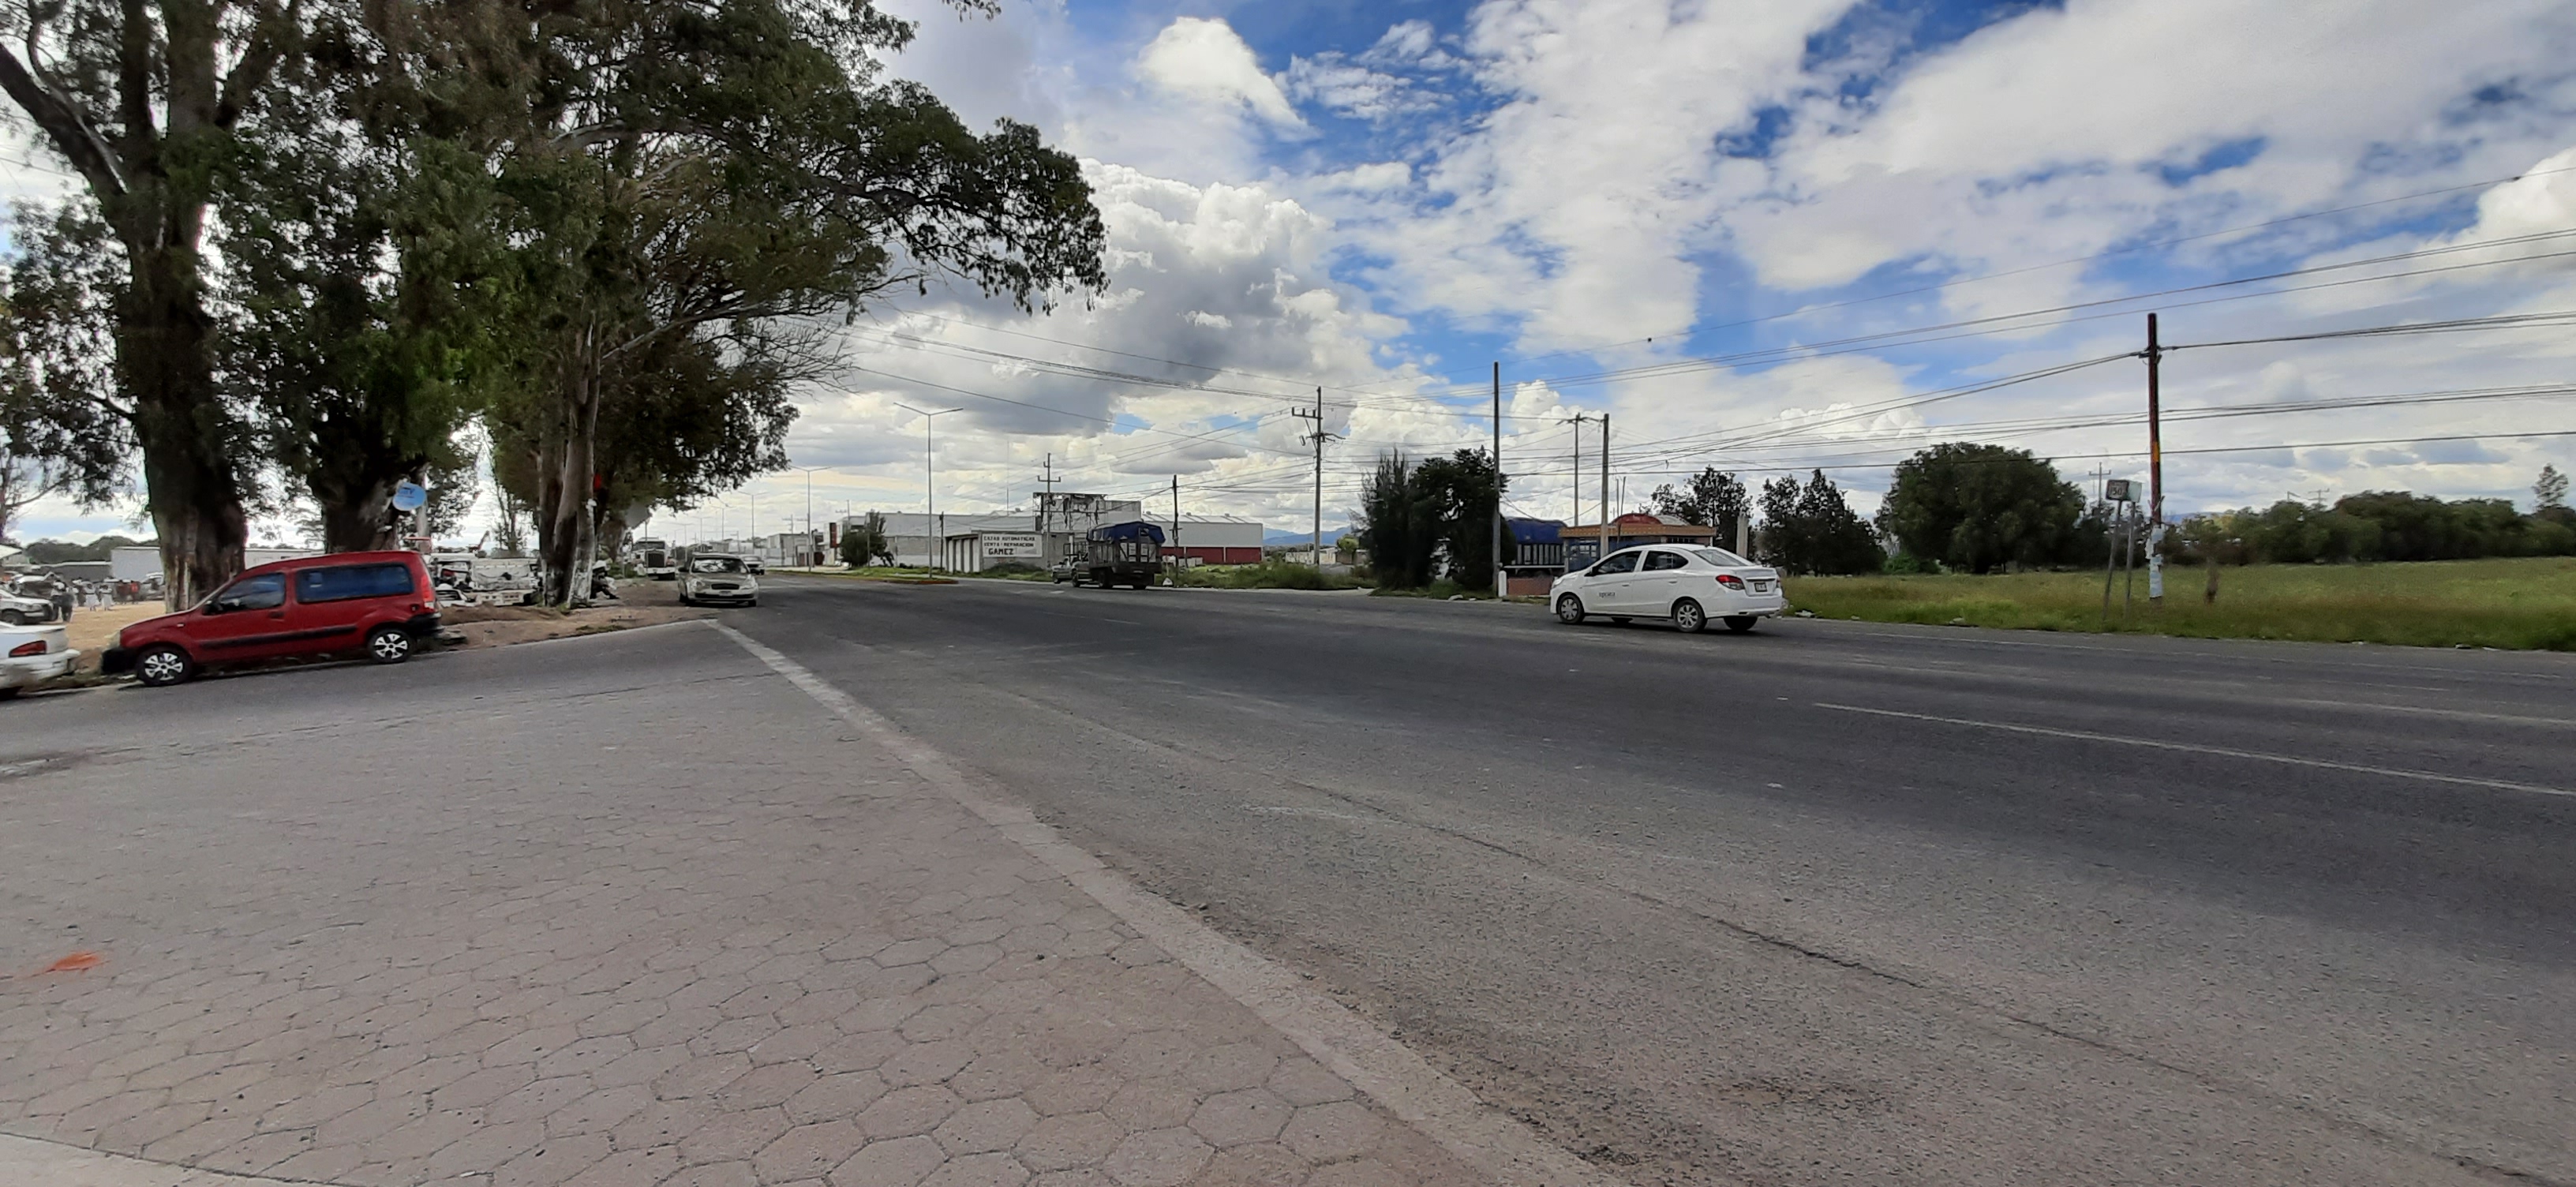 Policías de Tecamachalco frustran robo de camioneta de mudanza 